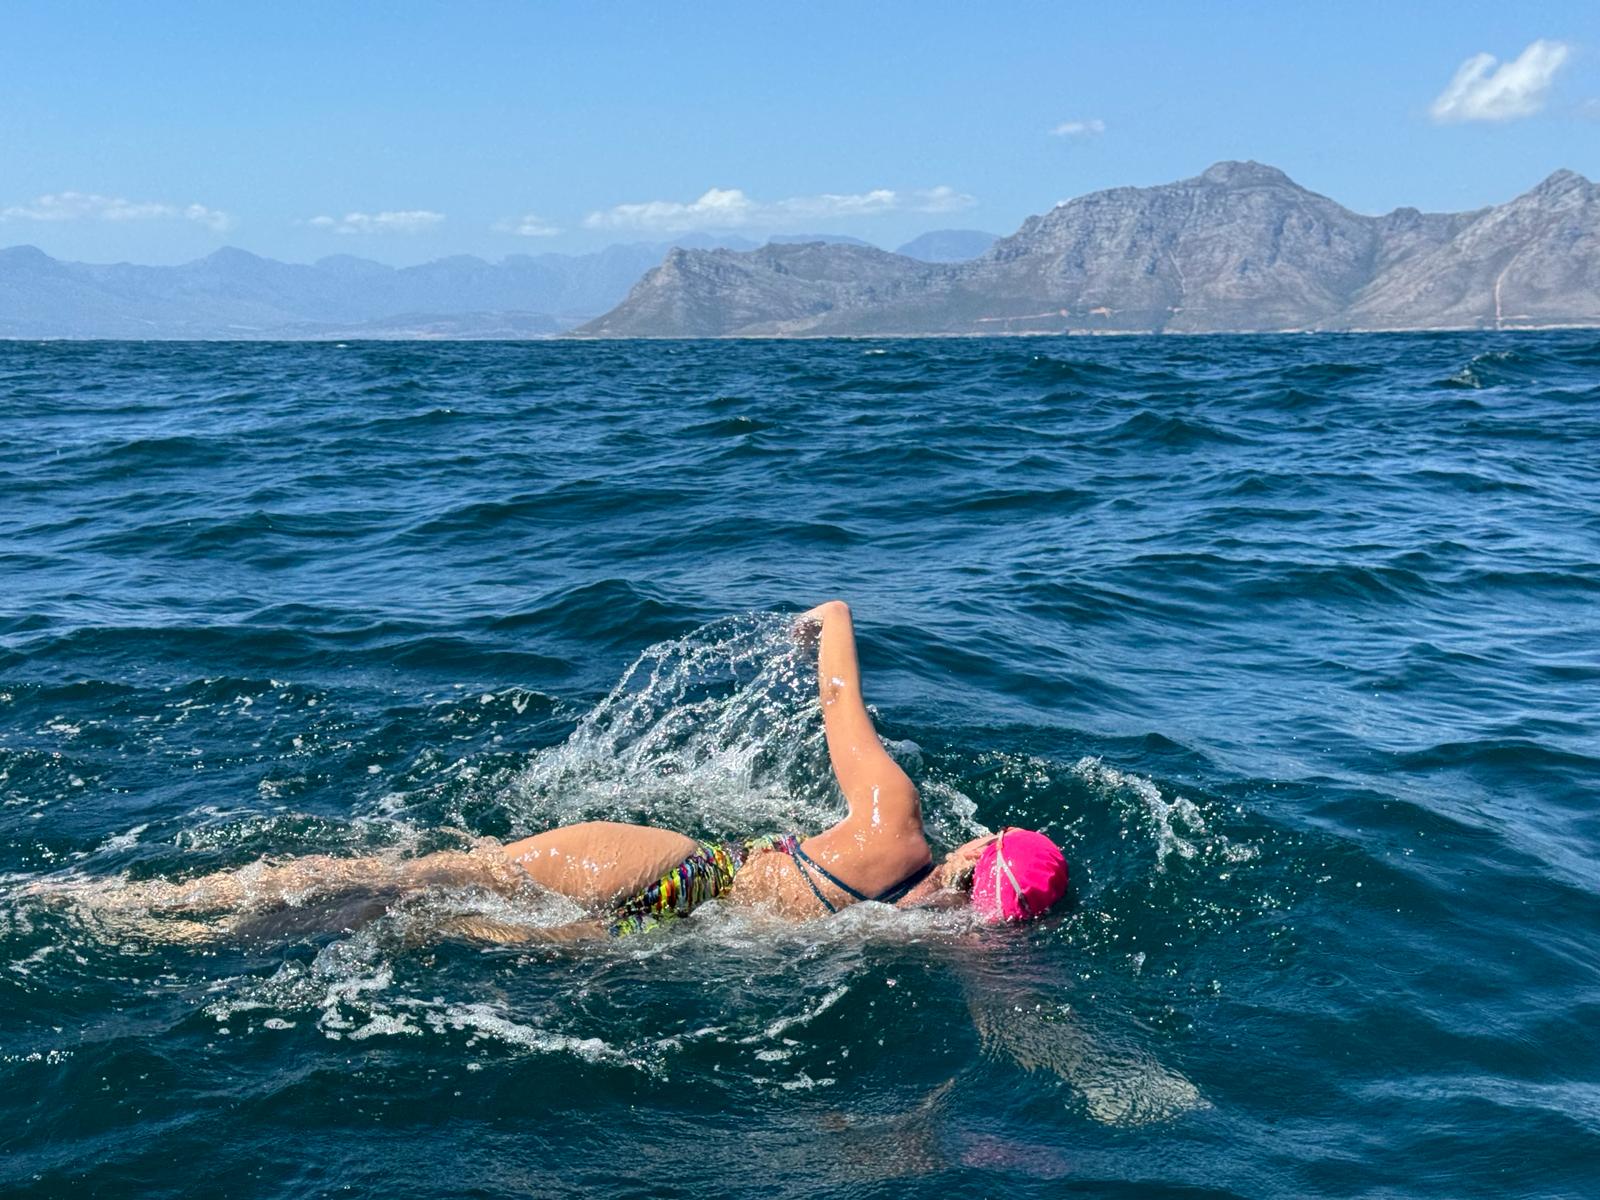 Dina has swam across False Bay in South Africa